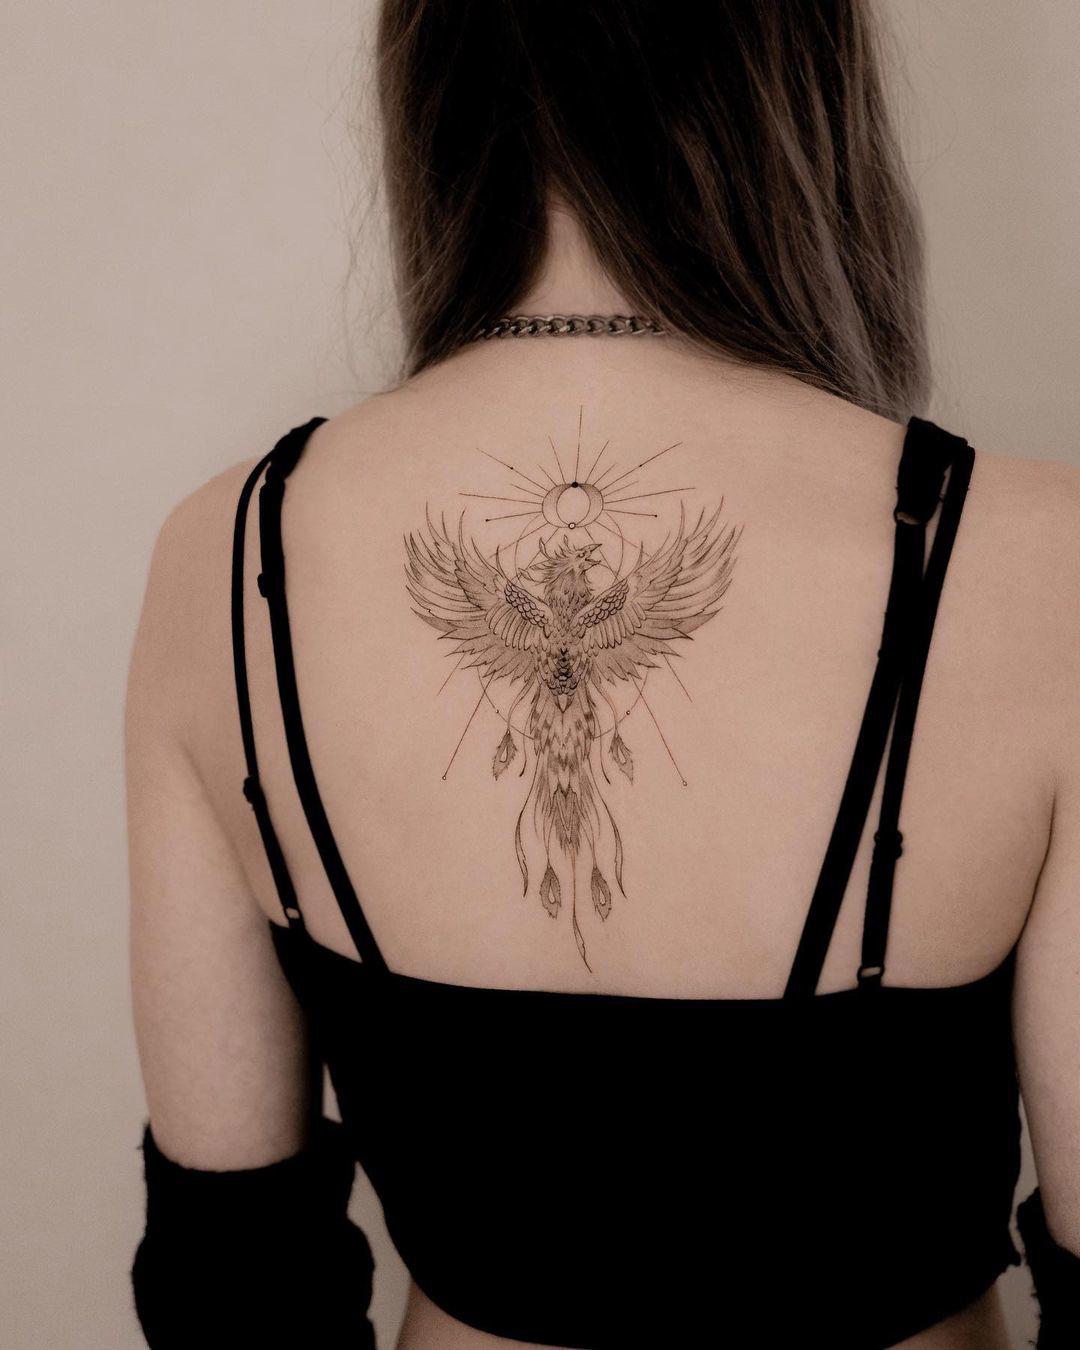 Tatuaje del ave fénix en el centro de la espalda